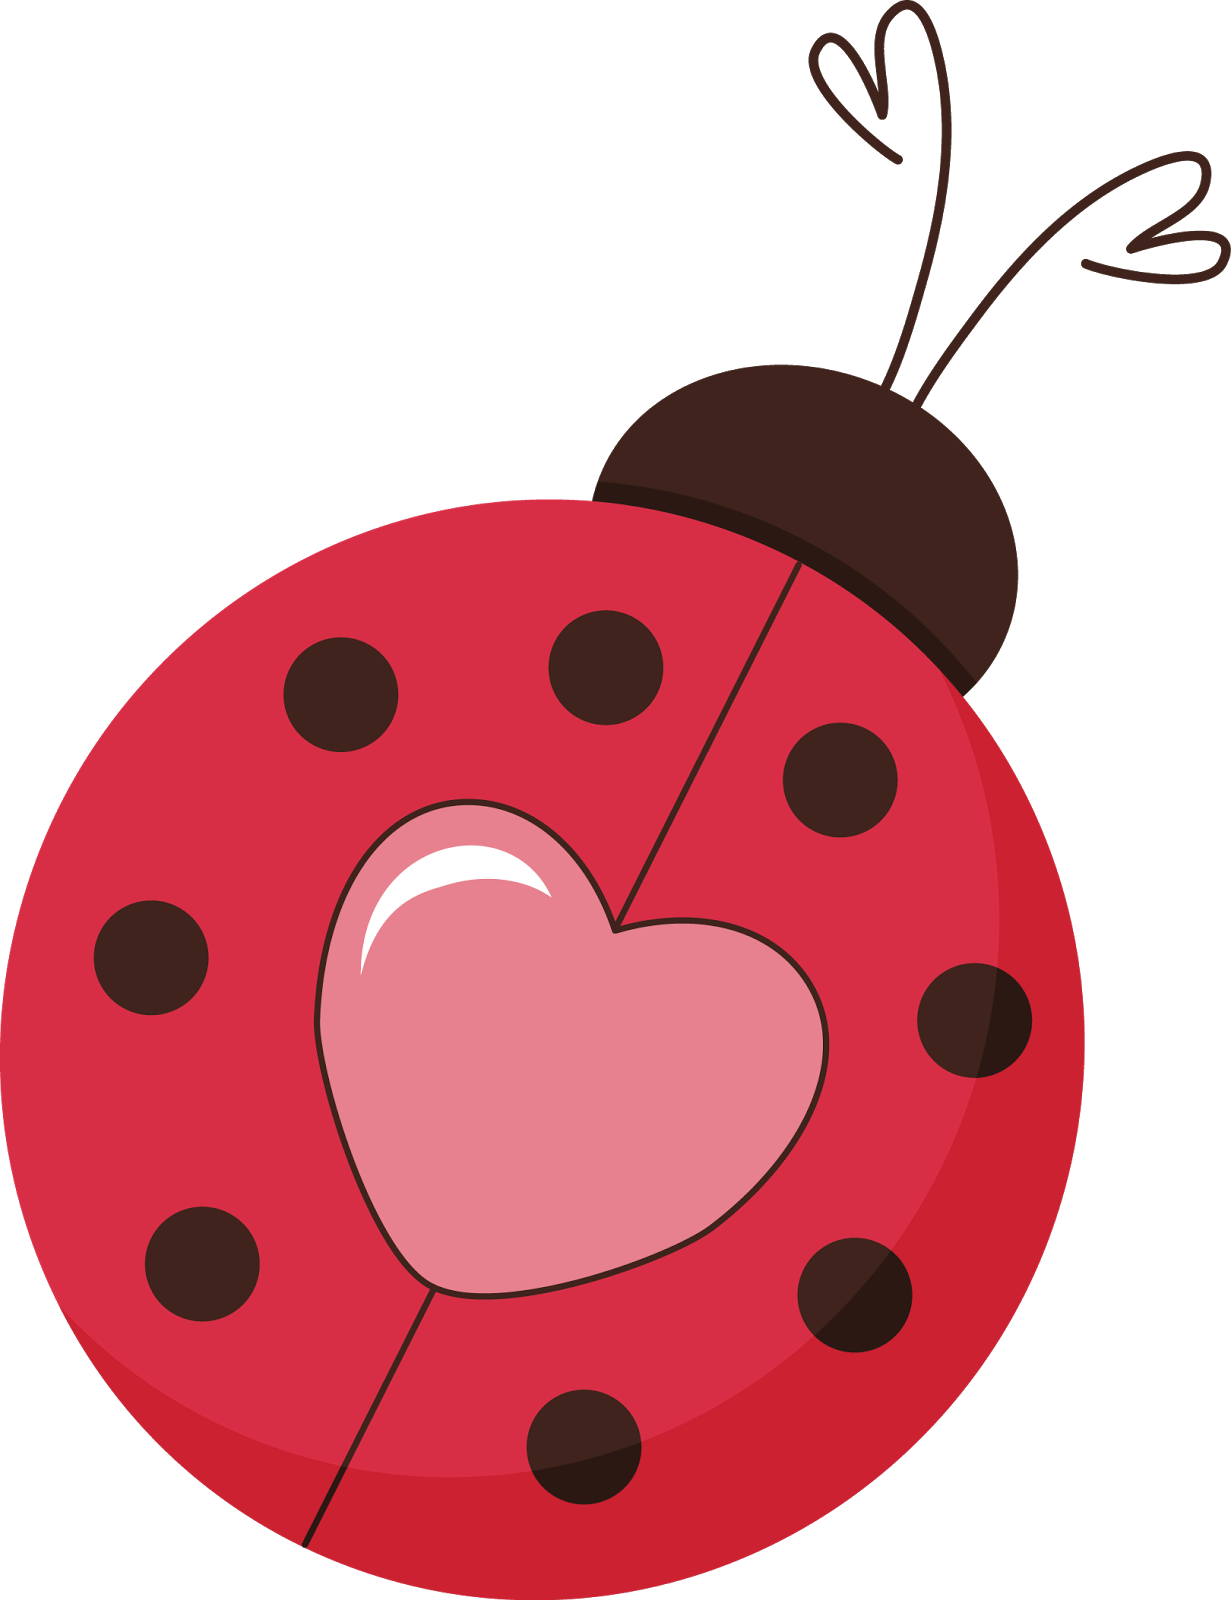 Love Bug Clip Art   Clipart Best